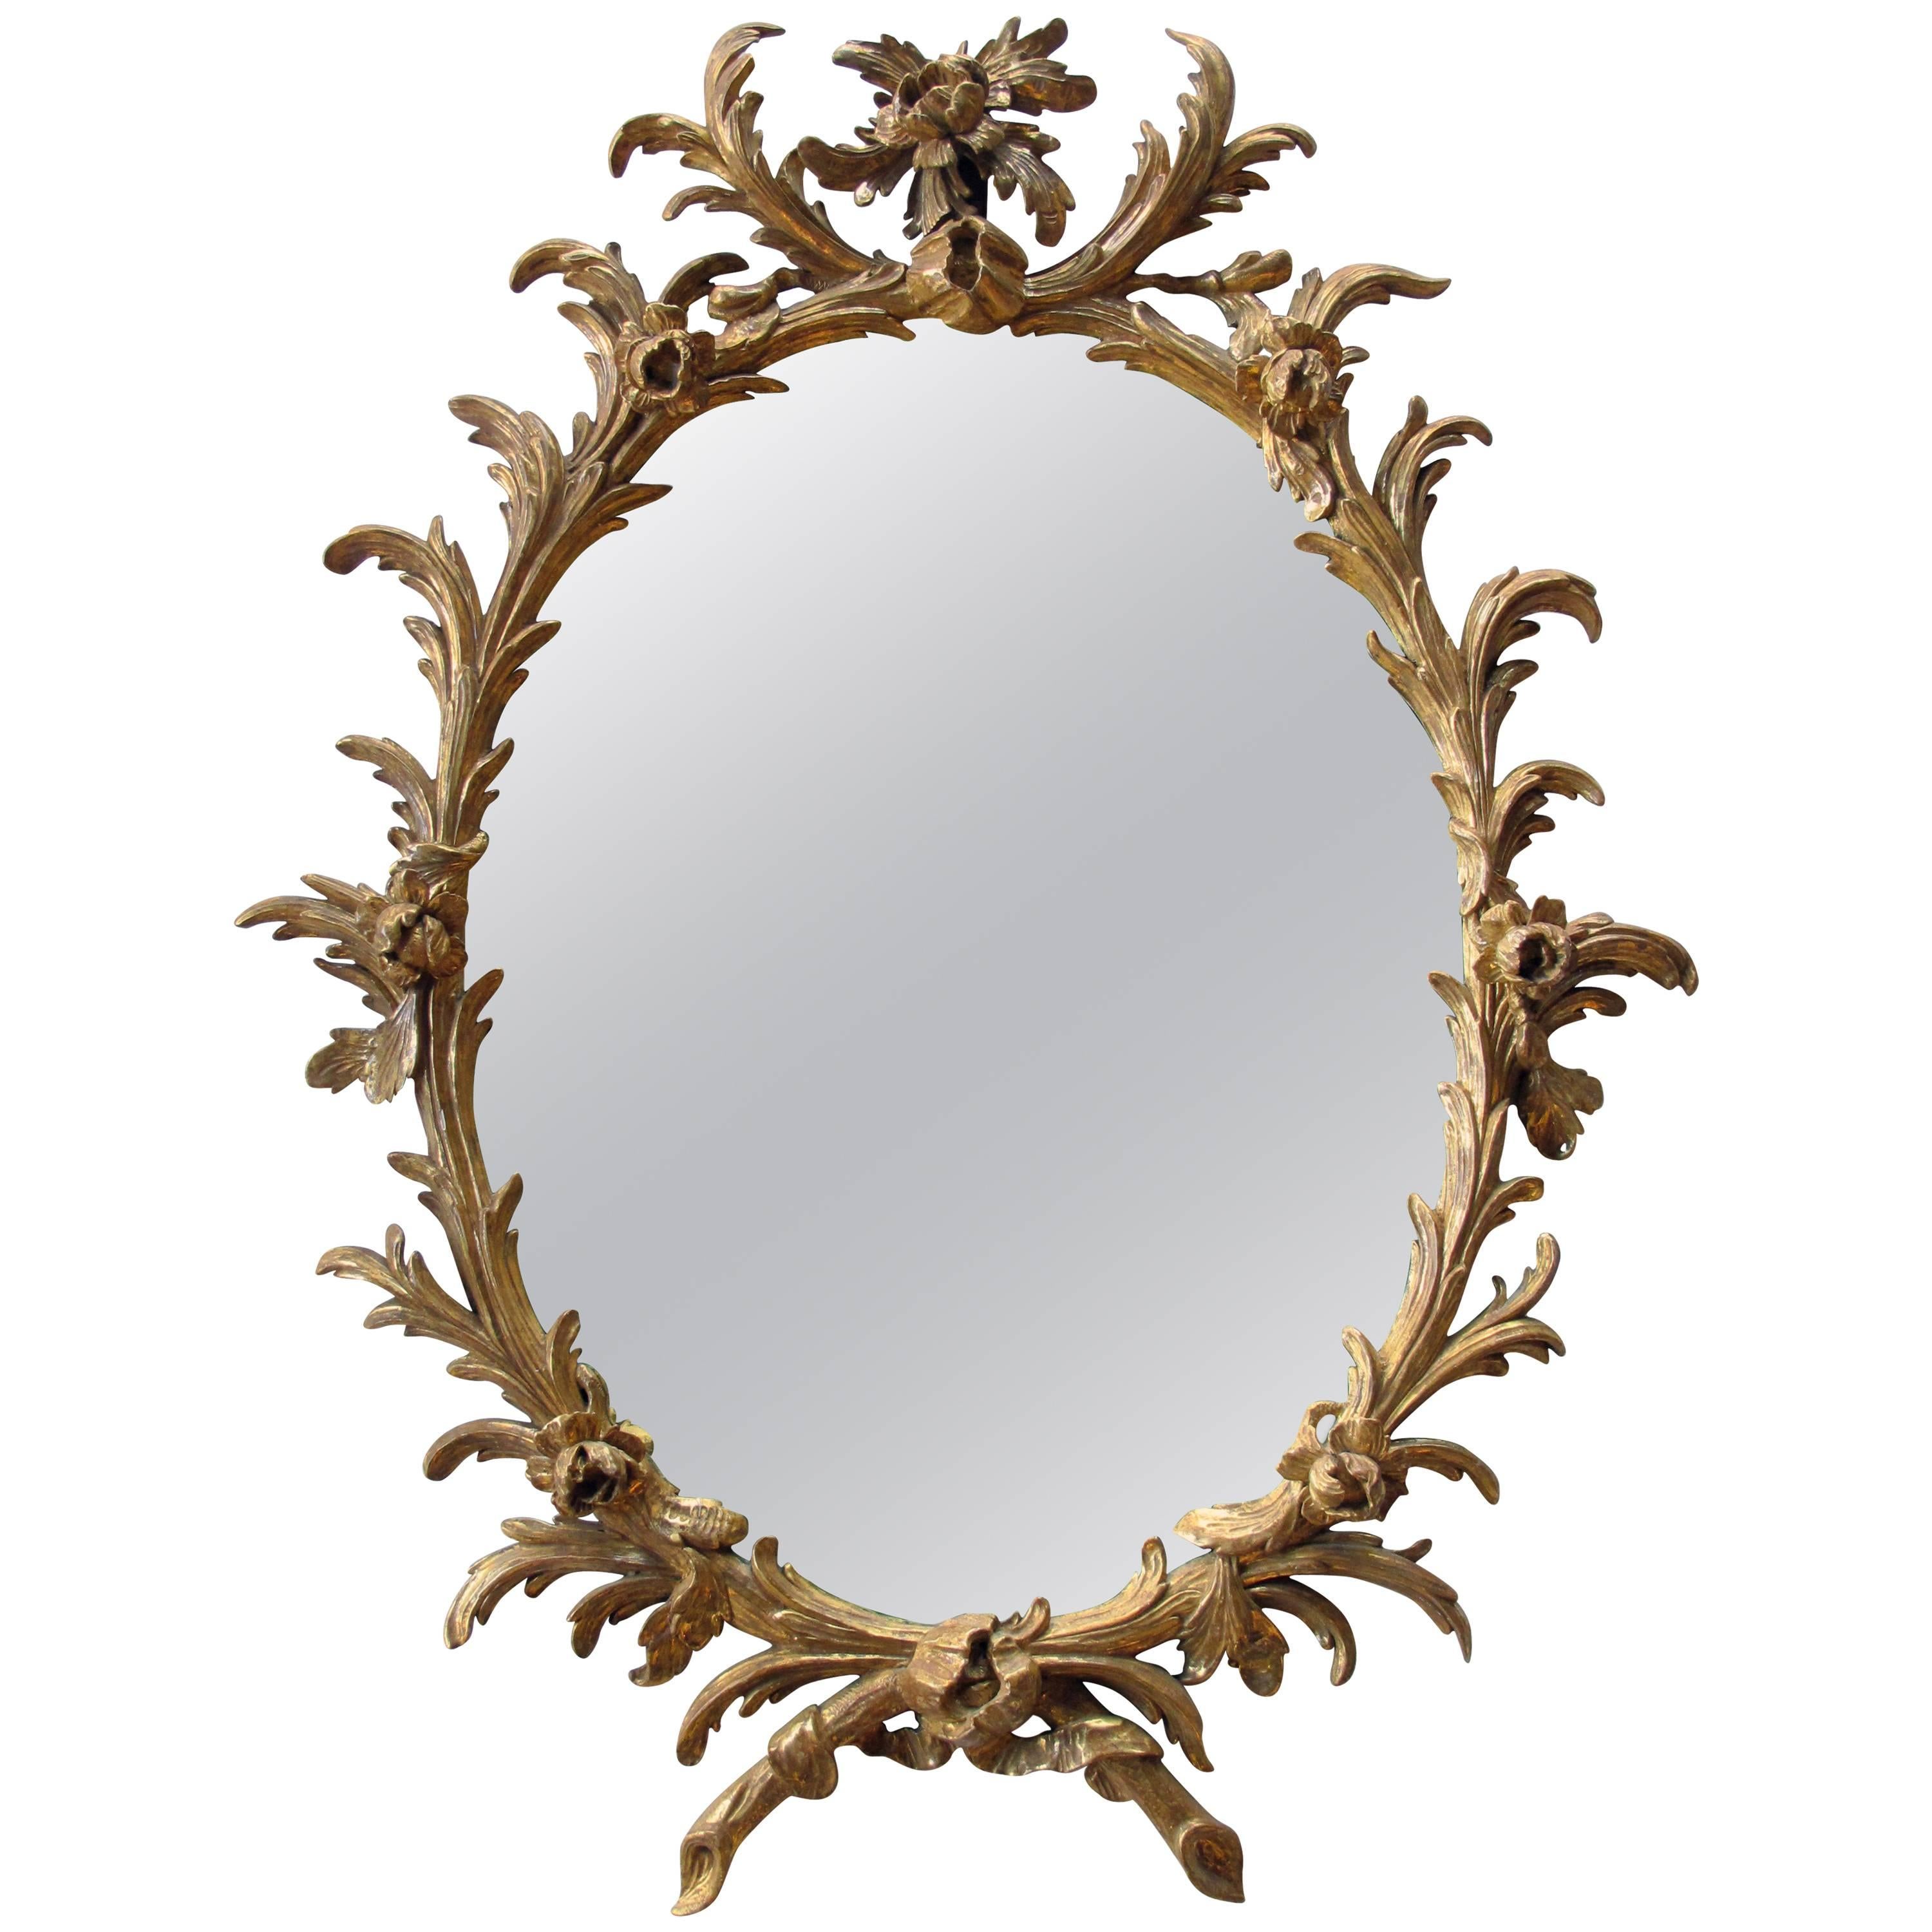 Good Quality English George II Rococo Gilt-Wood Oval Foliate-Carved Mirror For Sale